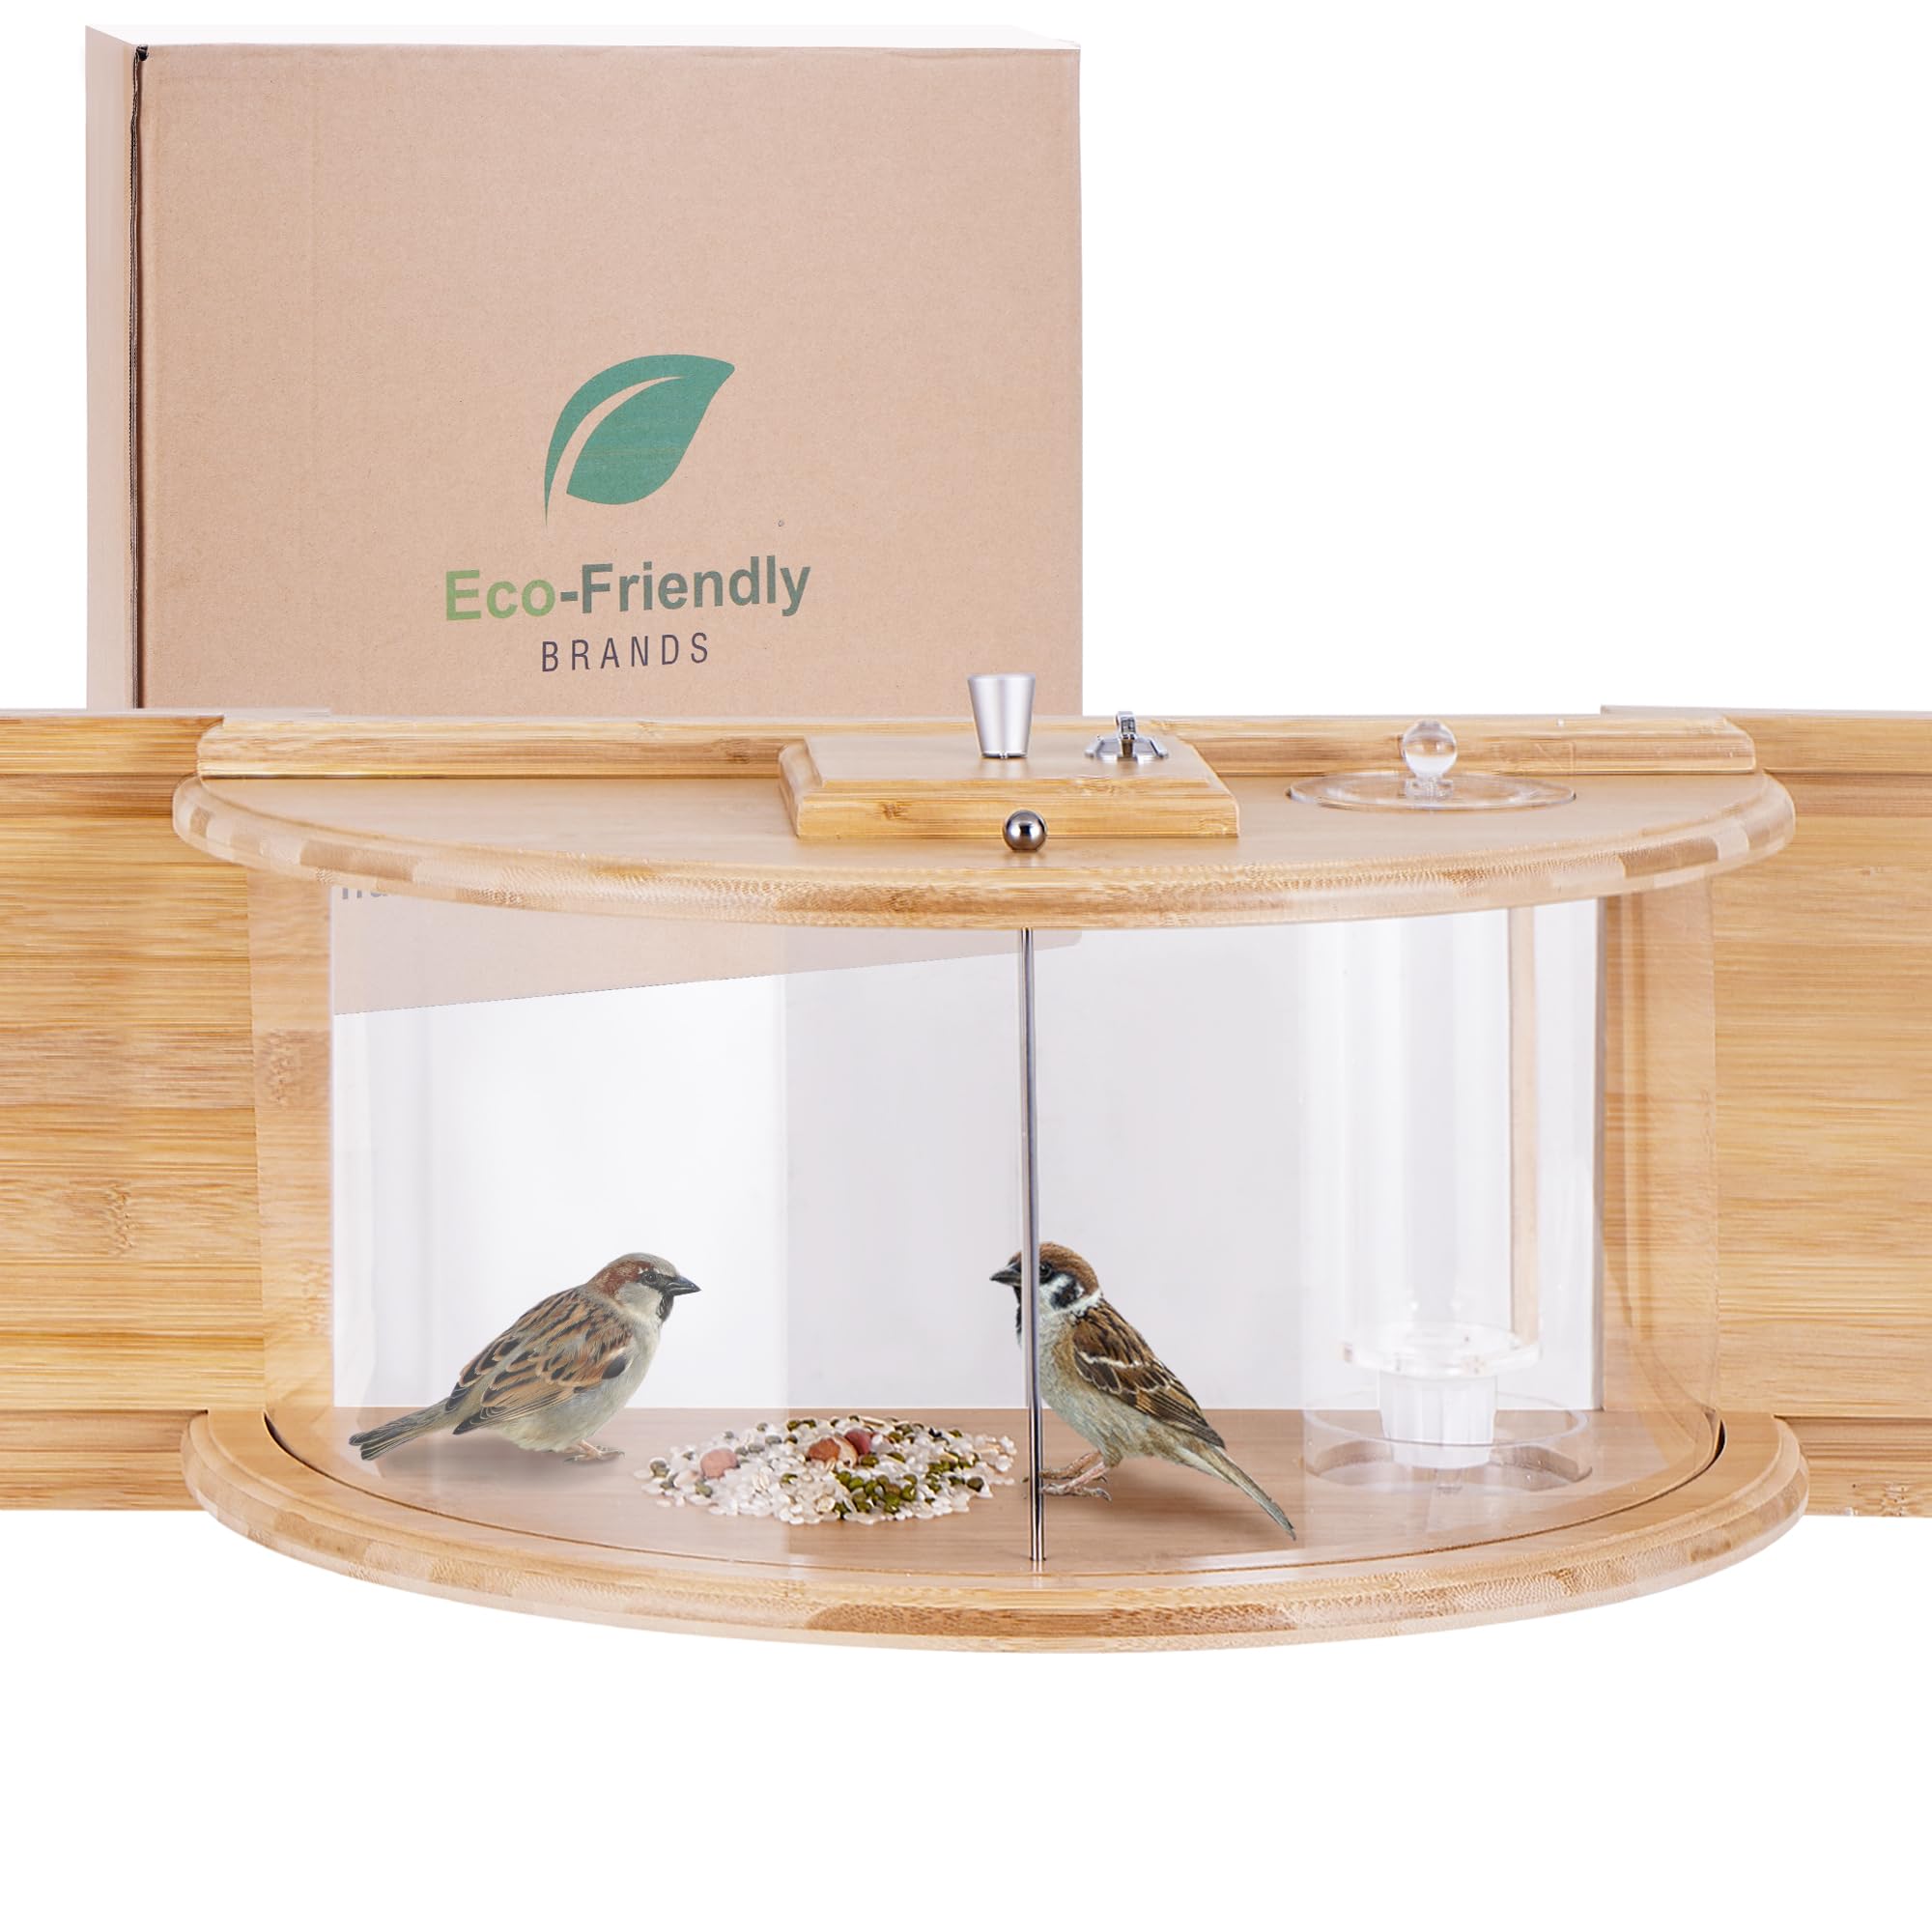 Eco-Friendly Window Bird Feeder / Waterer: Enjoy Watching Birds in The Comfort of Your Own Home